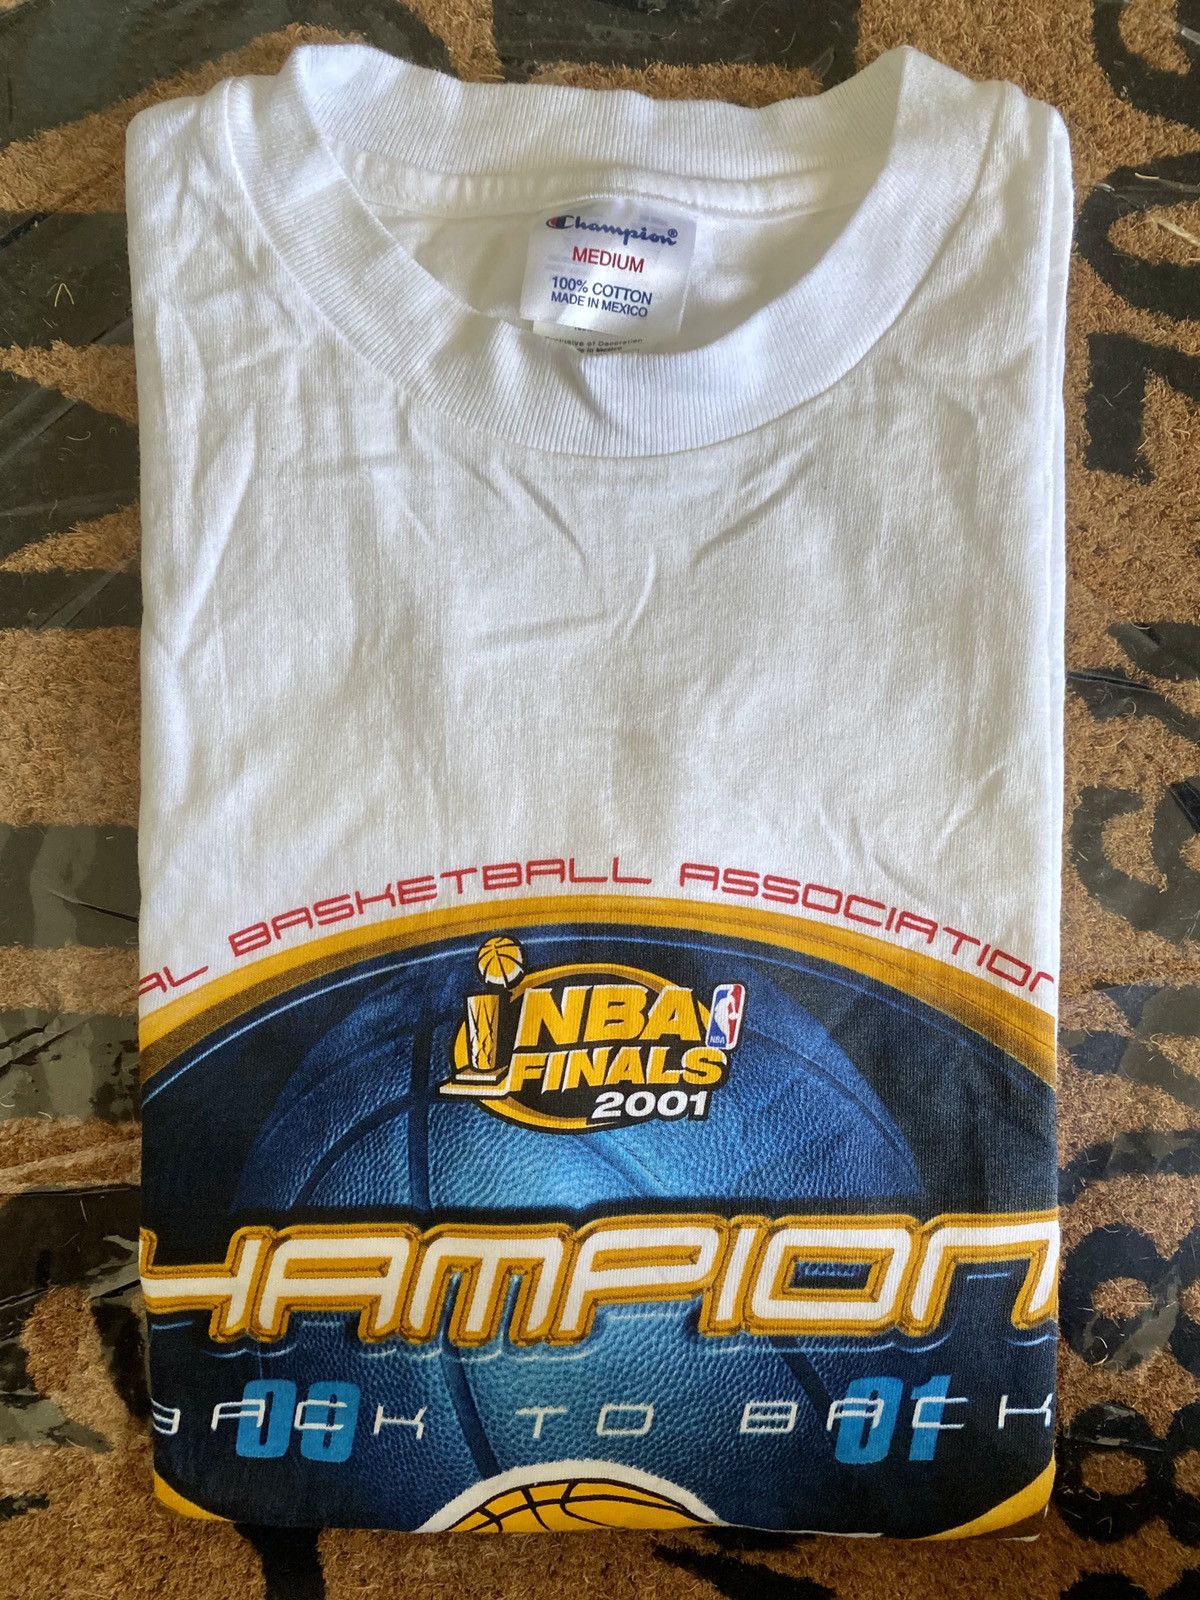 Lakers 2010 NBA Champions Shirt (Vintage and Rare), Men's Fashion